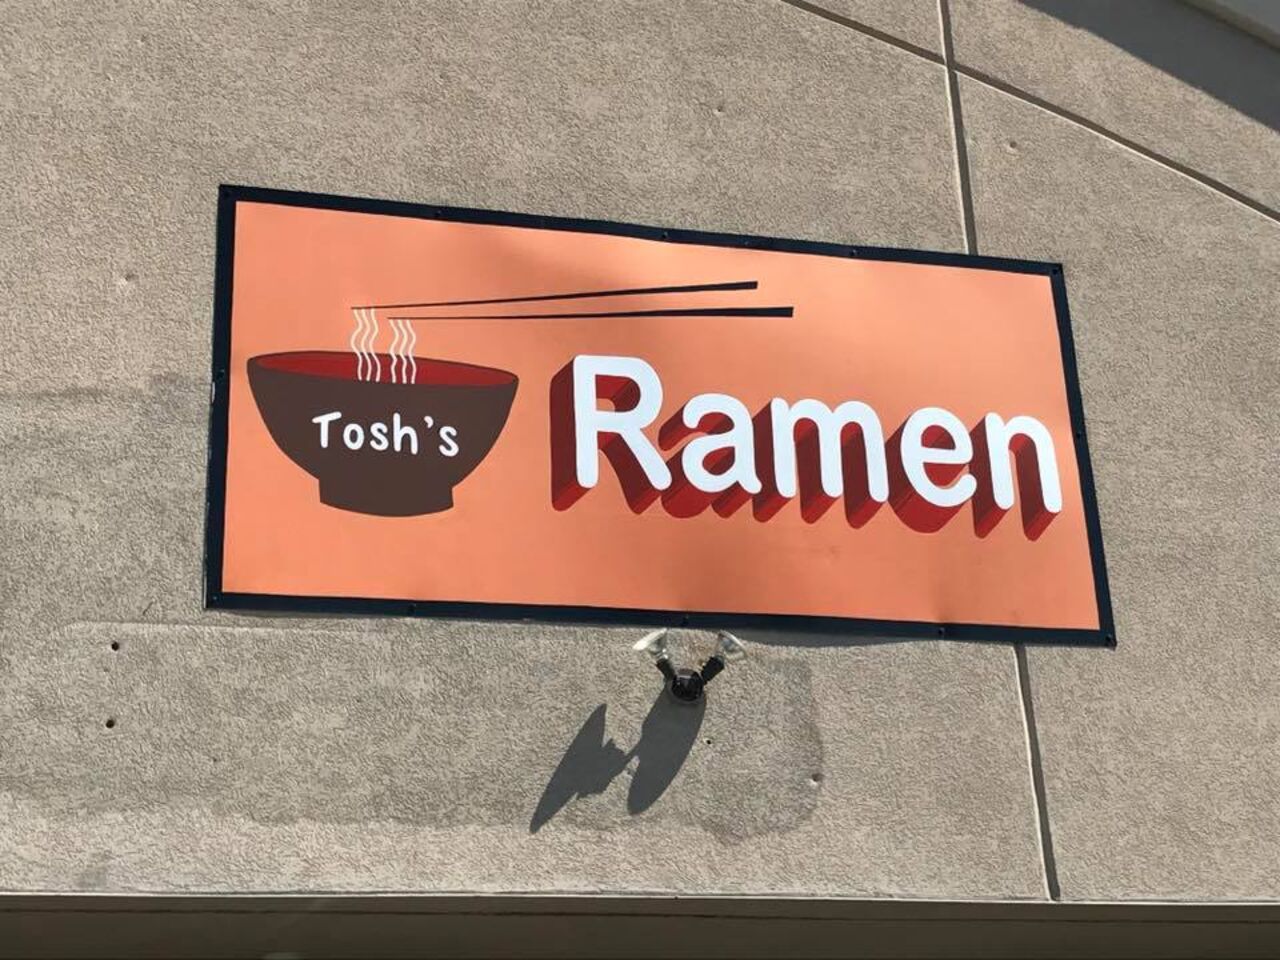 A photo of Tosh's Ramen